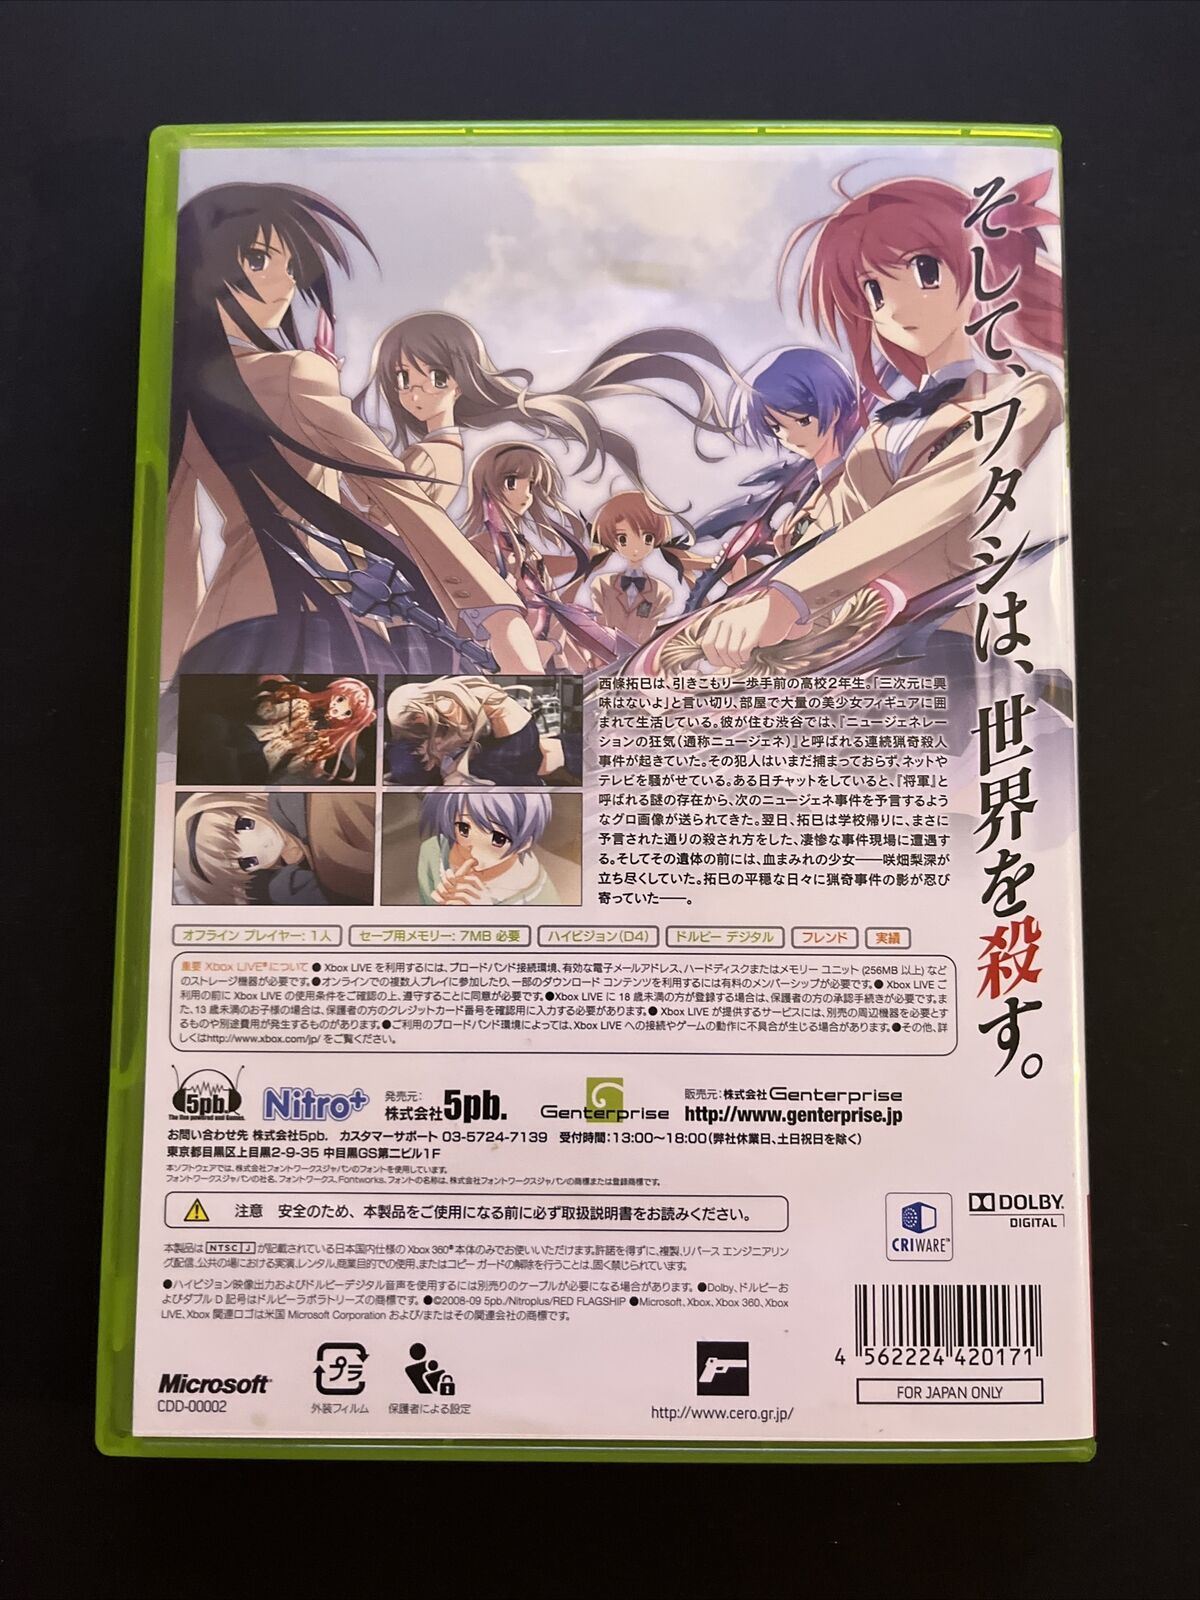 Chaos Head Noah - Microsoft Xbox 360 NTSC-J JAPAN Game Complete with Manual